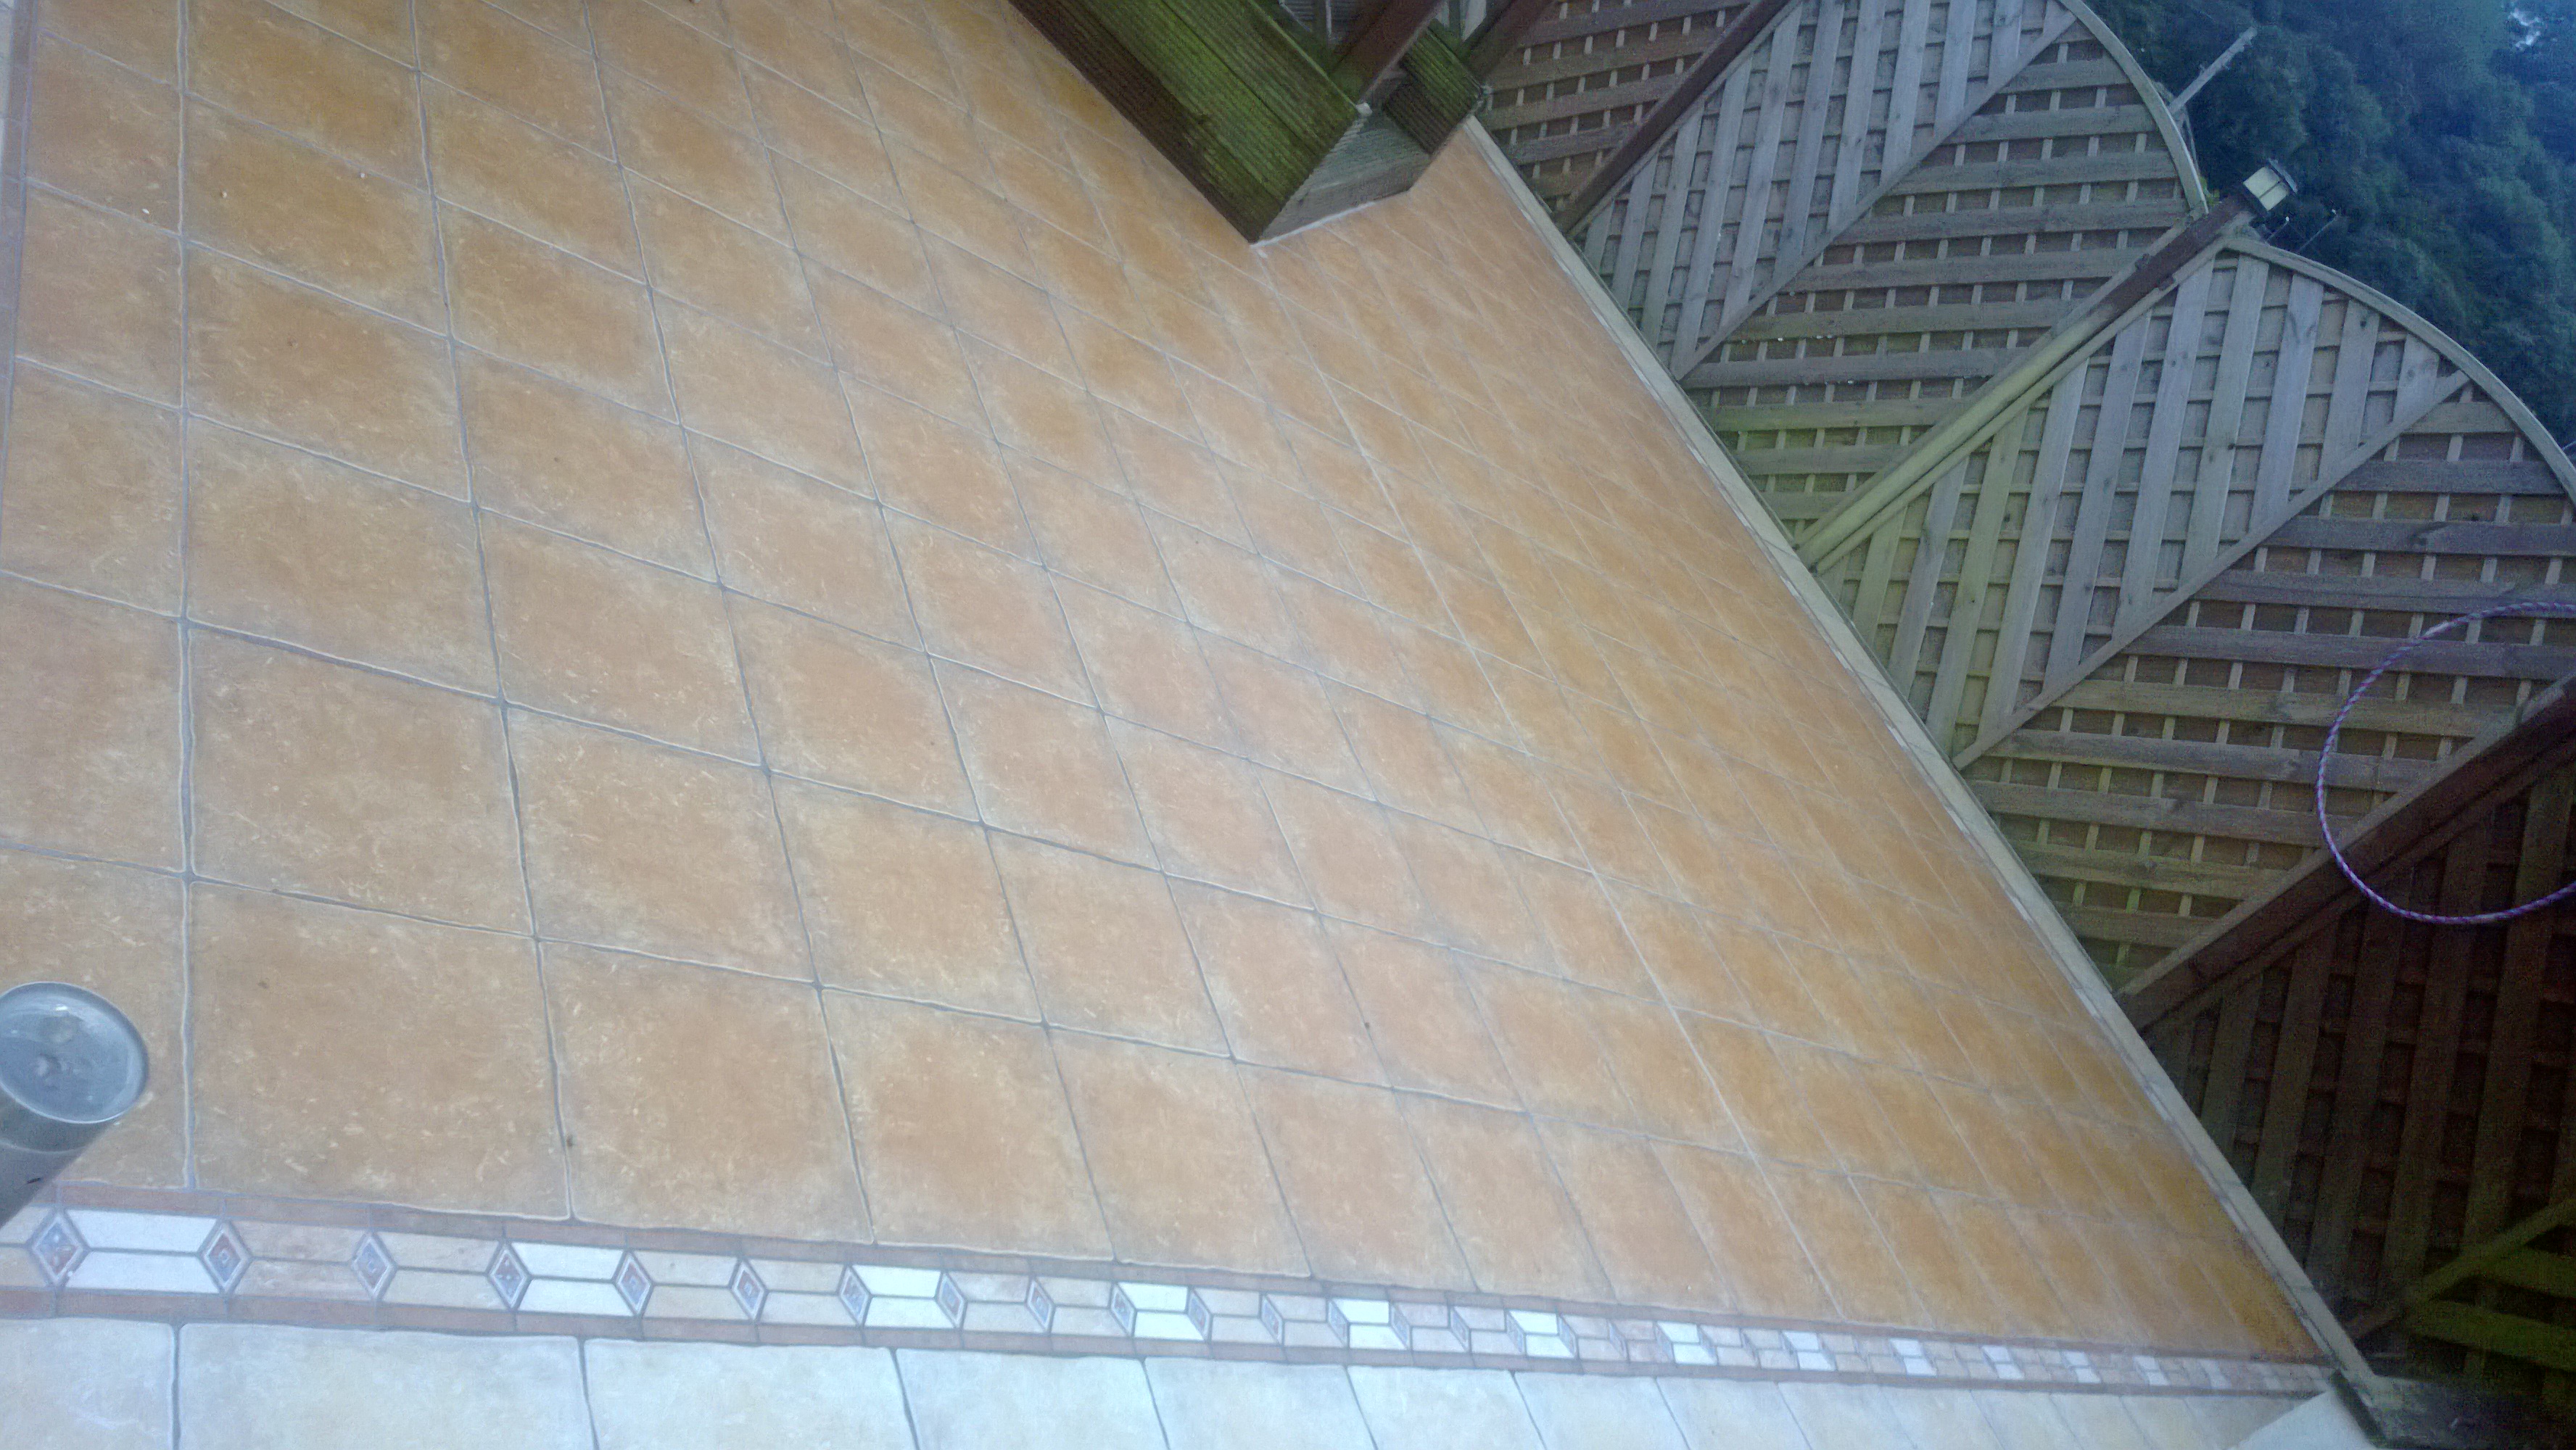 Tiled decking